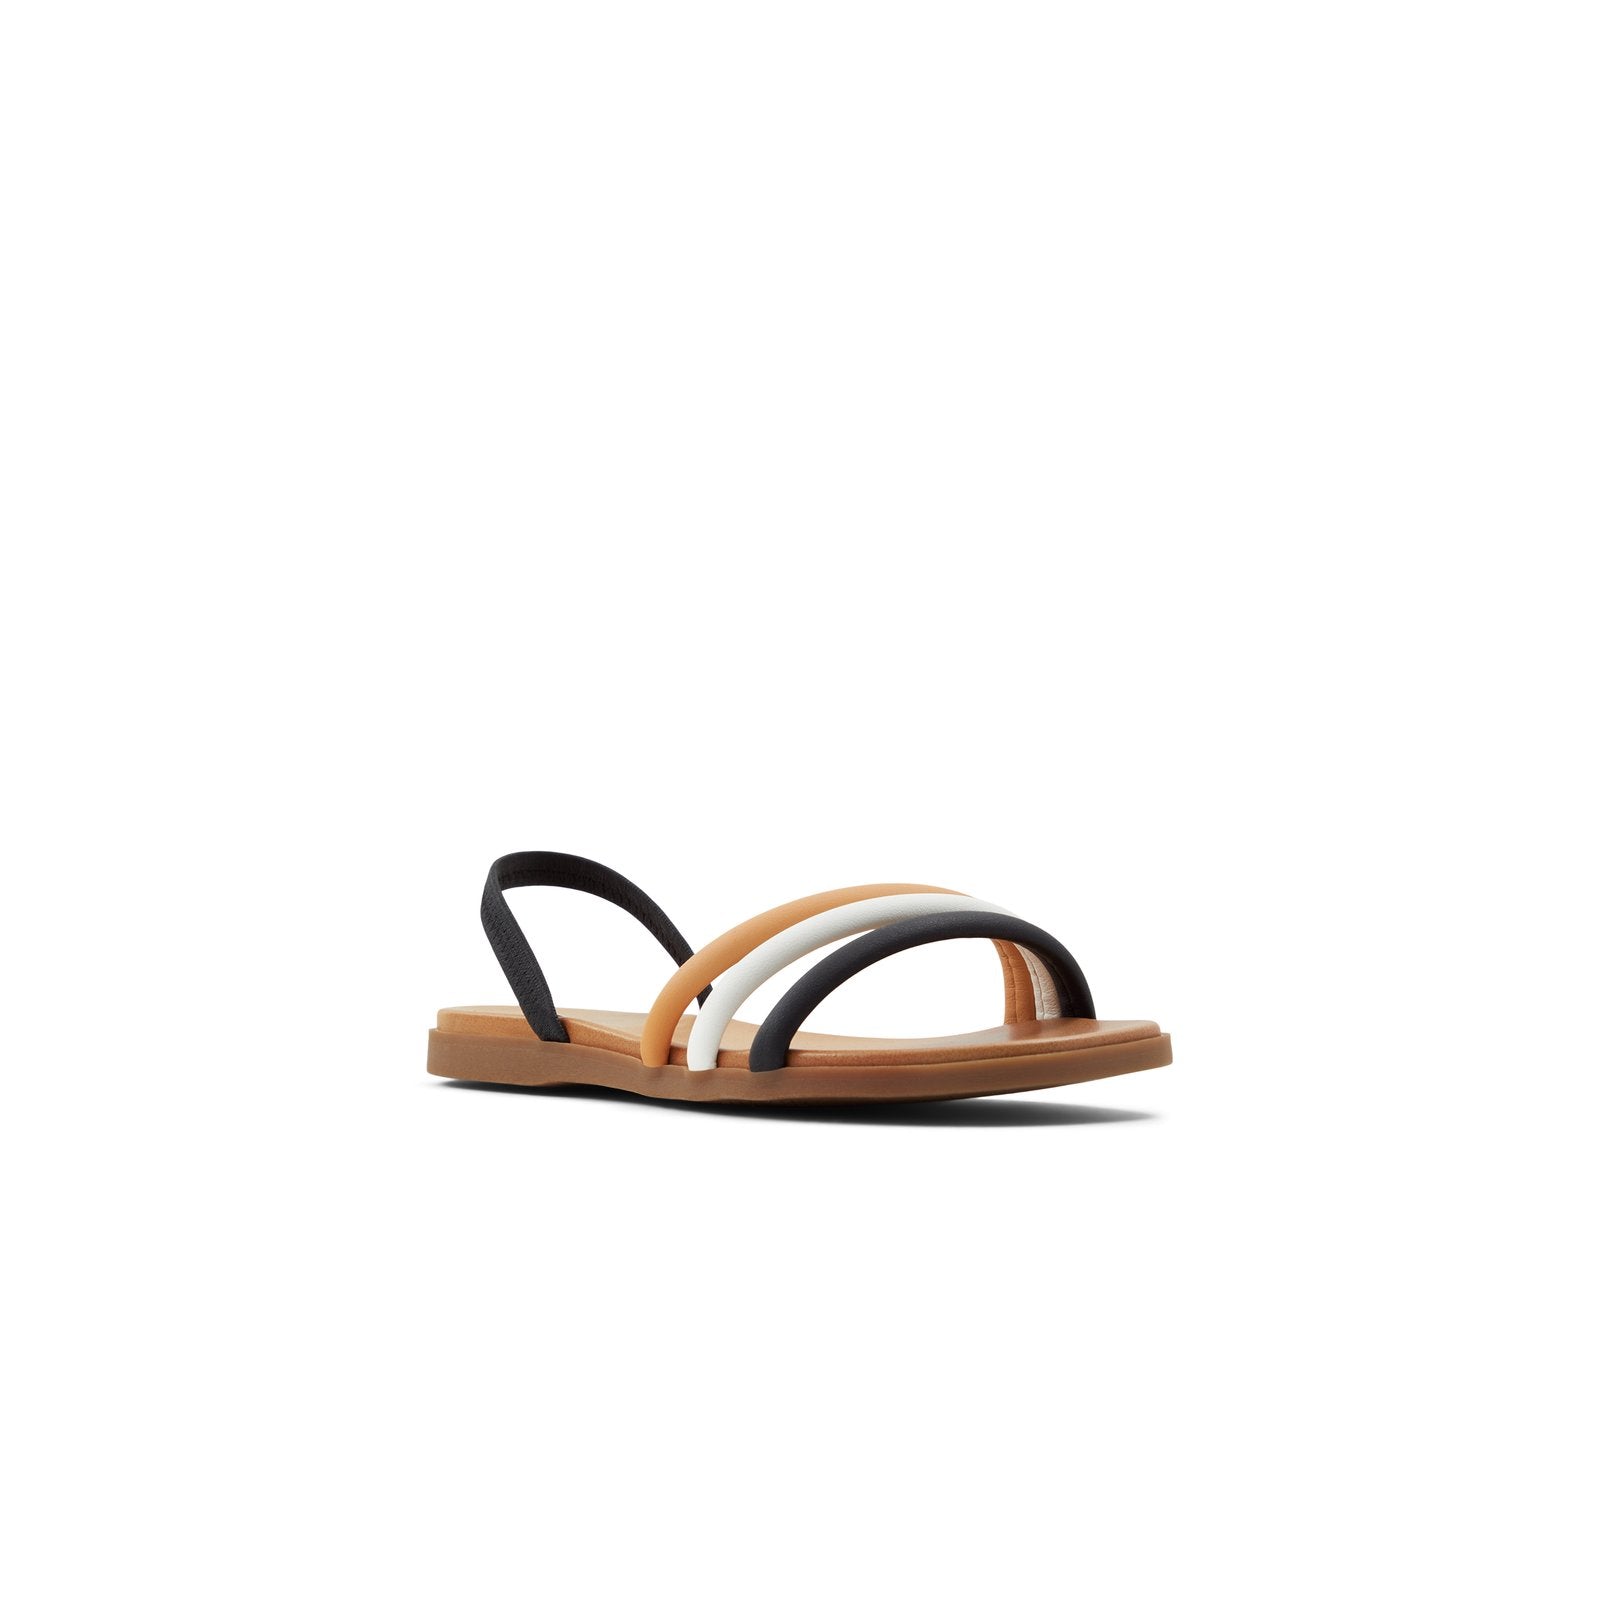 Emalia / Flat Sandals Women Shoes - Black Multi - CALL IT SPRING KSA